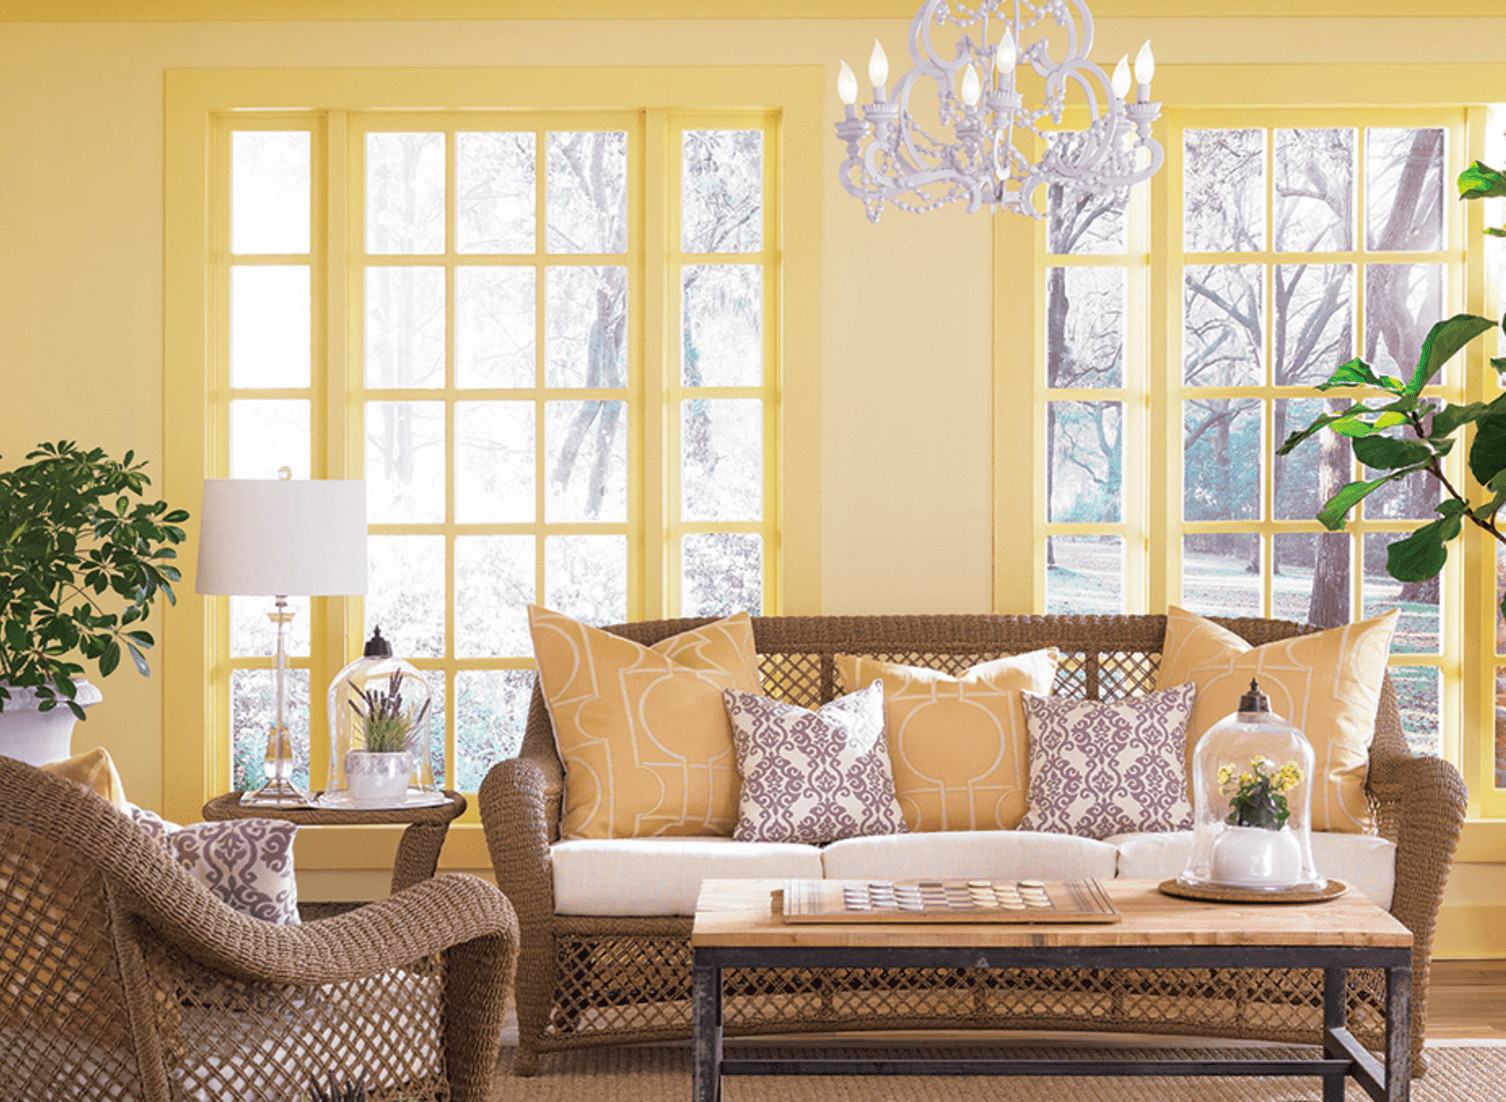 Popular Living Room Paint Colors
 11 Best Neutral Paint Colors for Your Home